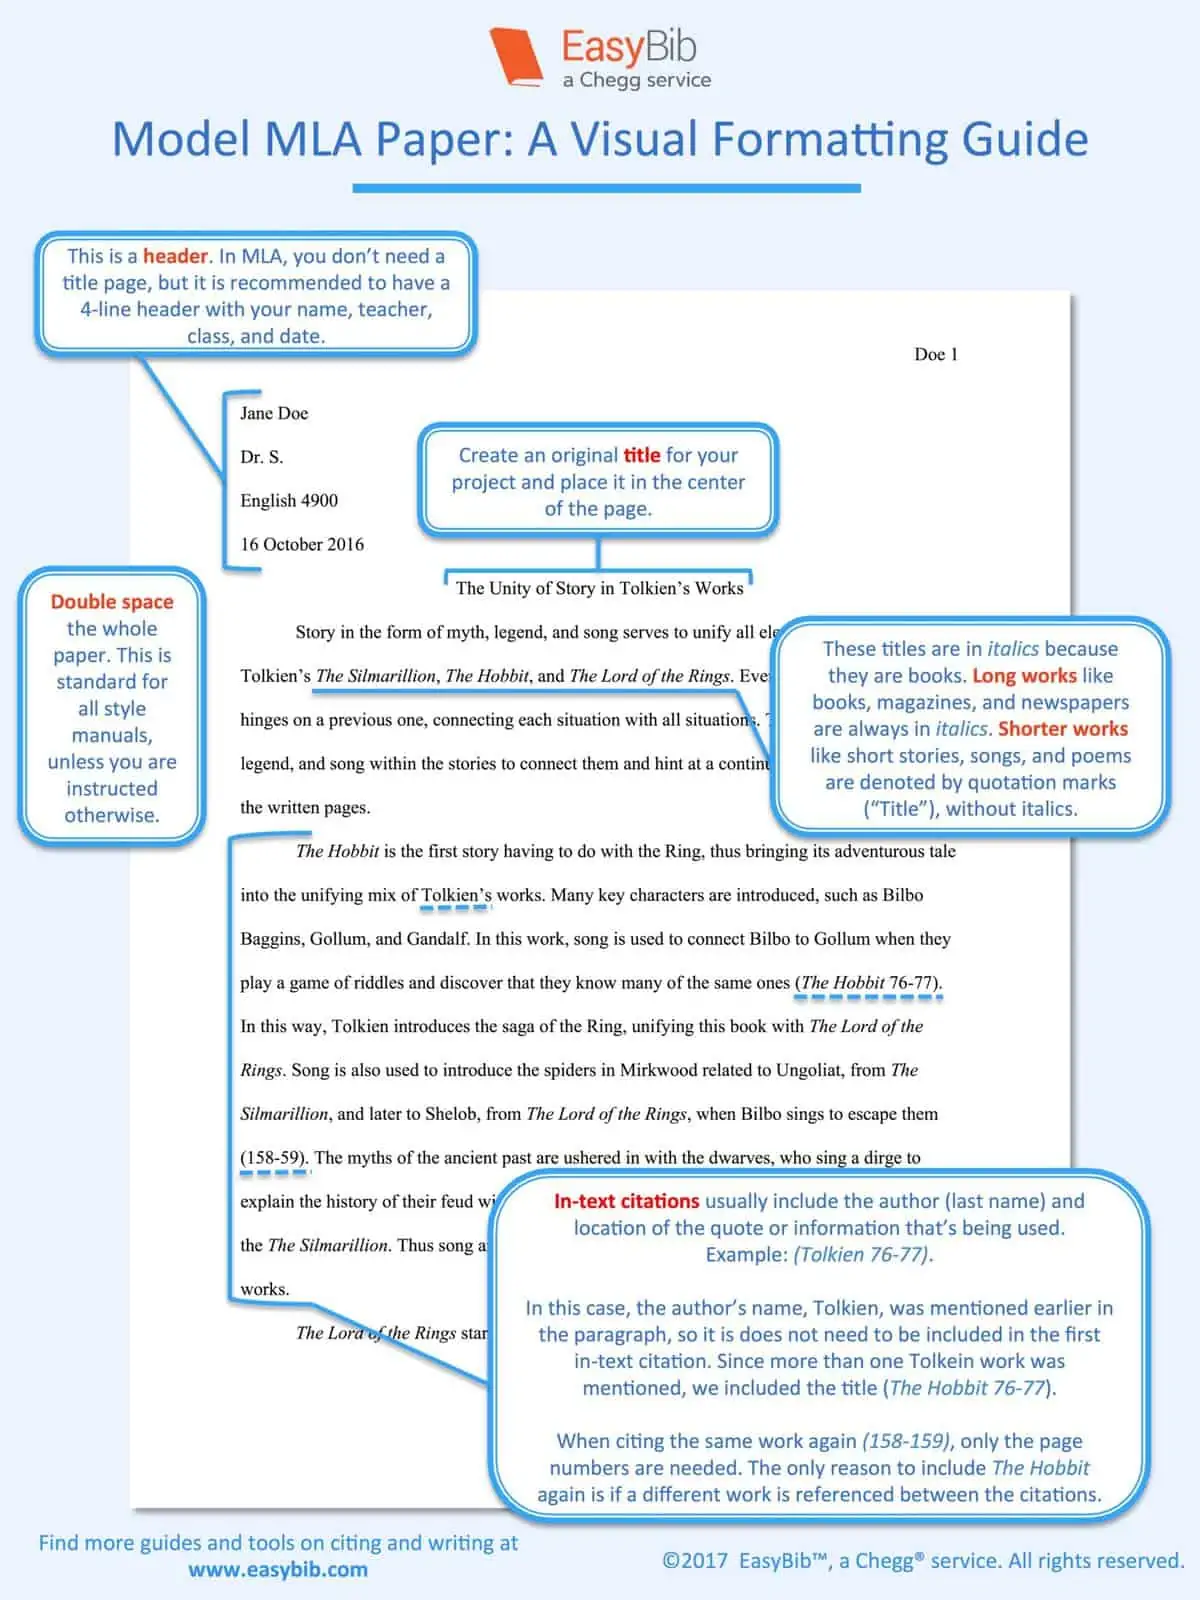 example of mla essay format